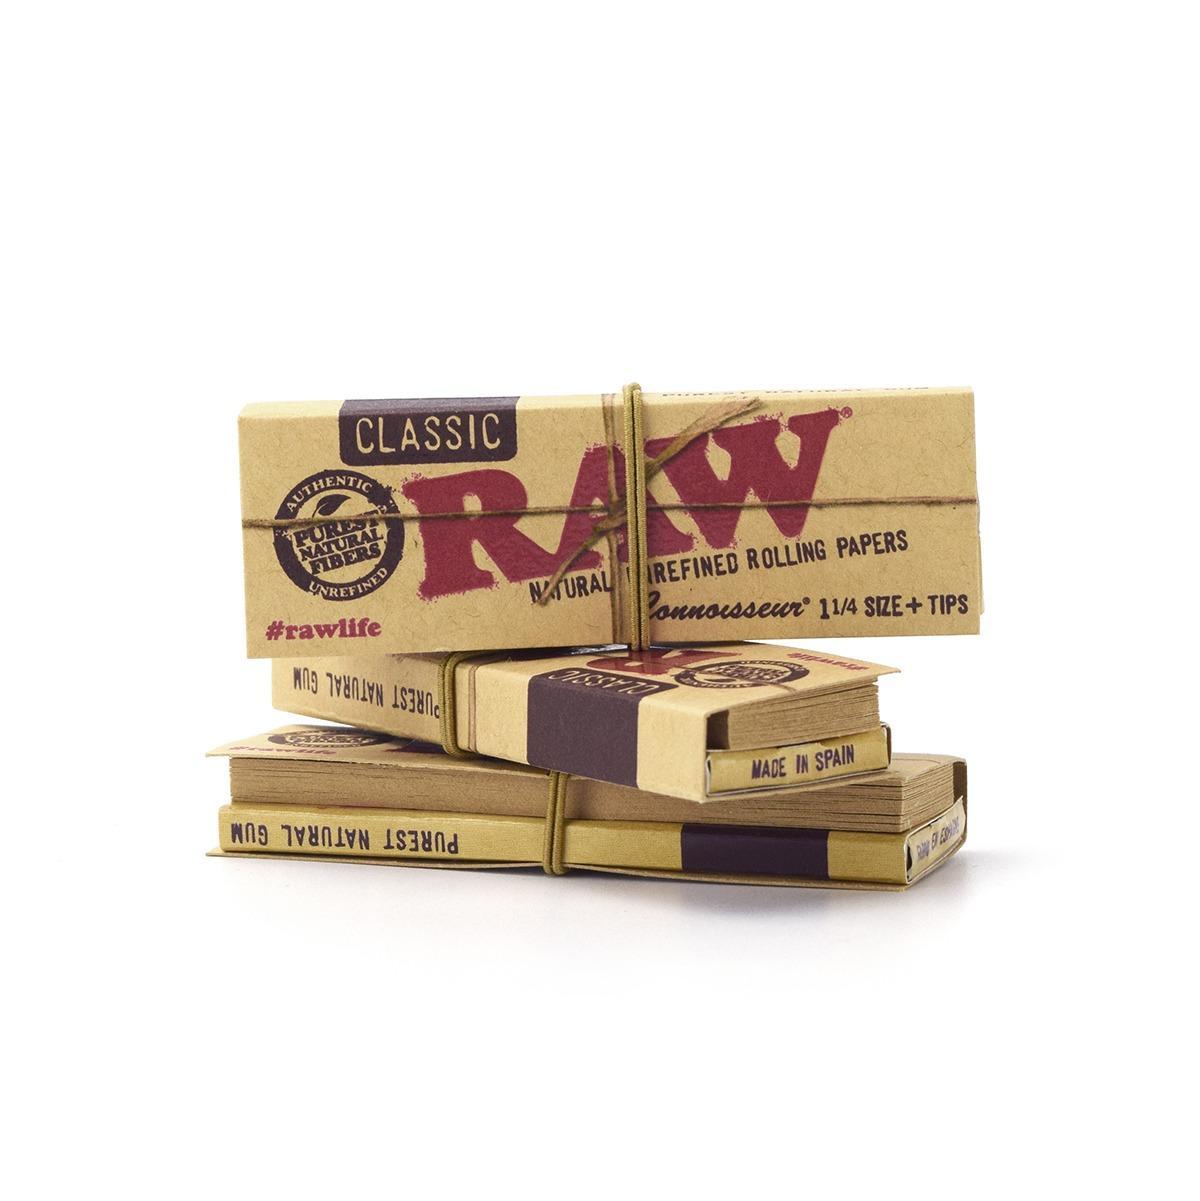 RAW Original Tips - CBD and hemp products